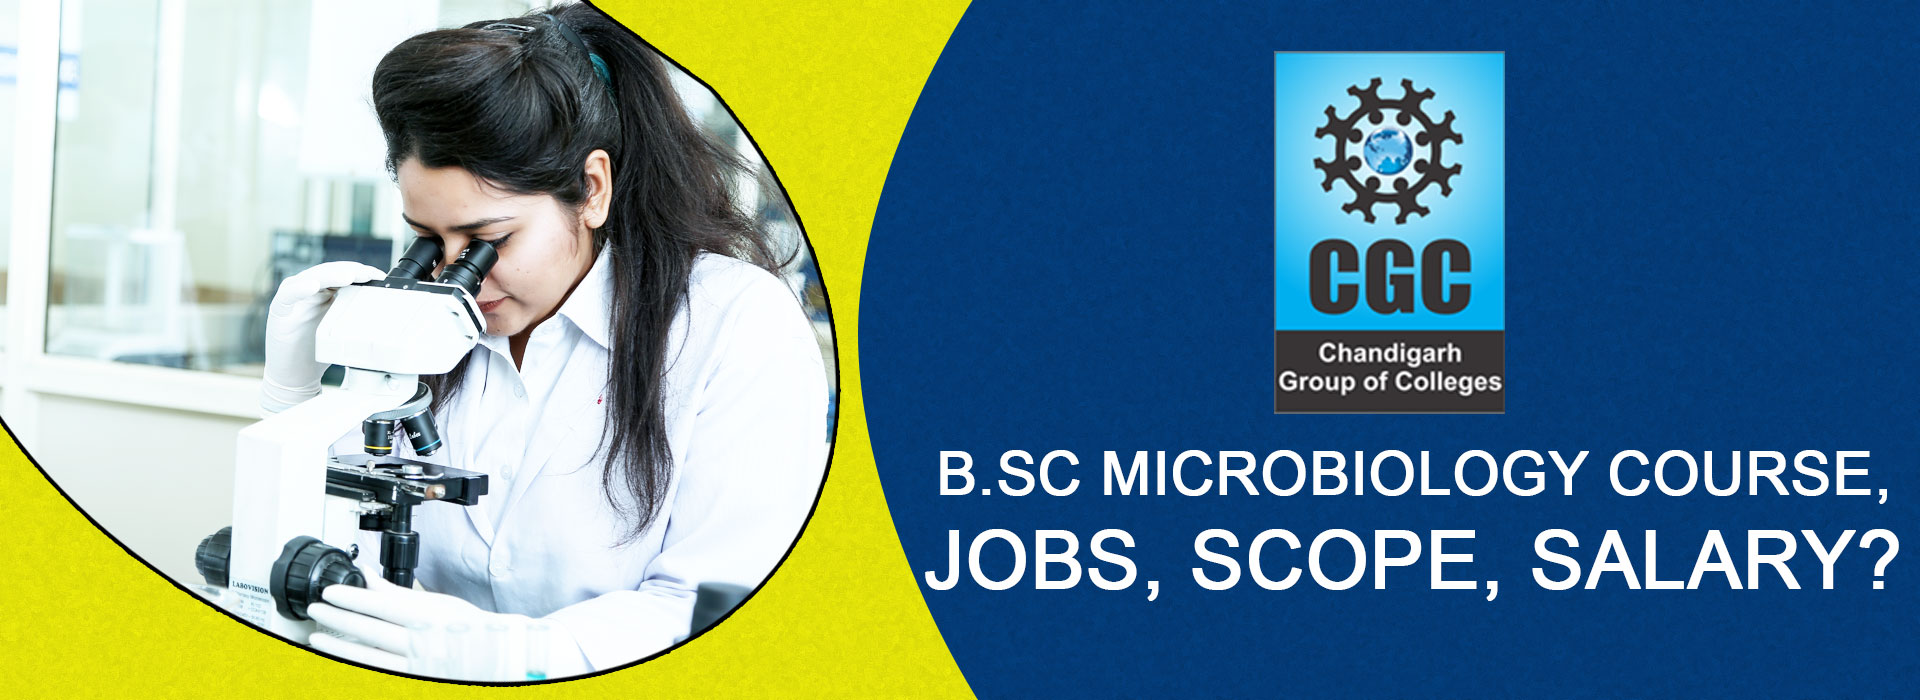 B.Sc Microbiology Course, Jobs, Scope, Salary? 